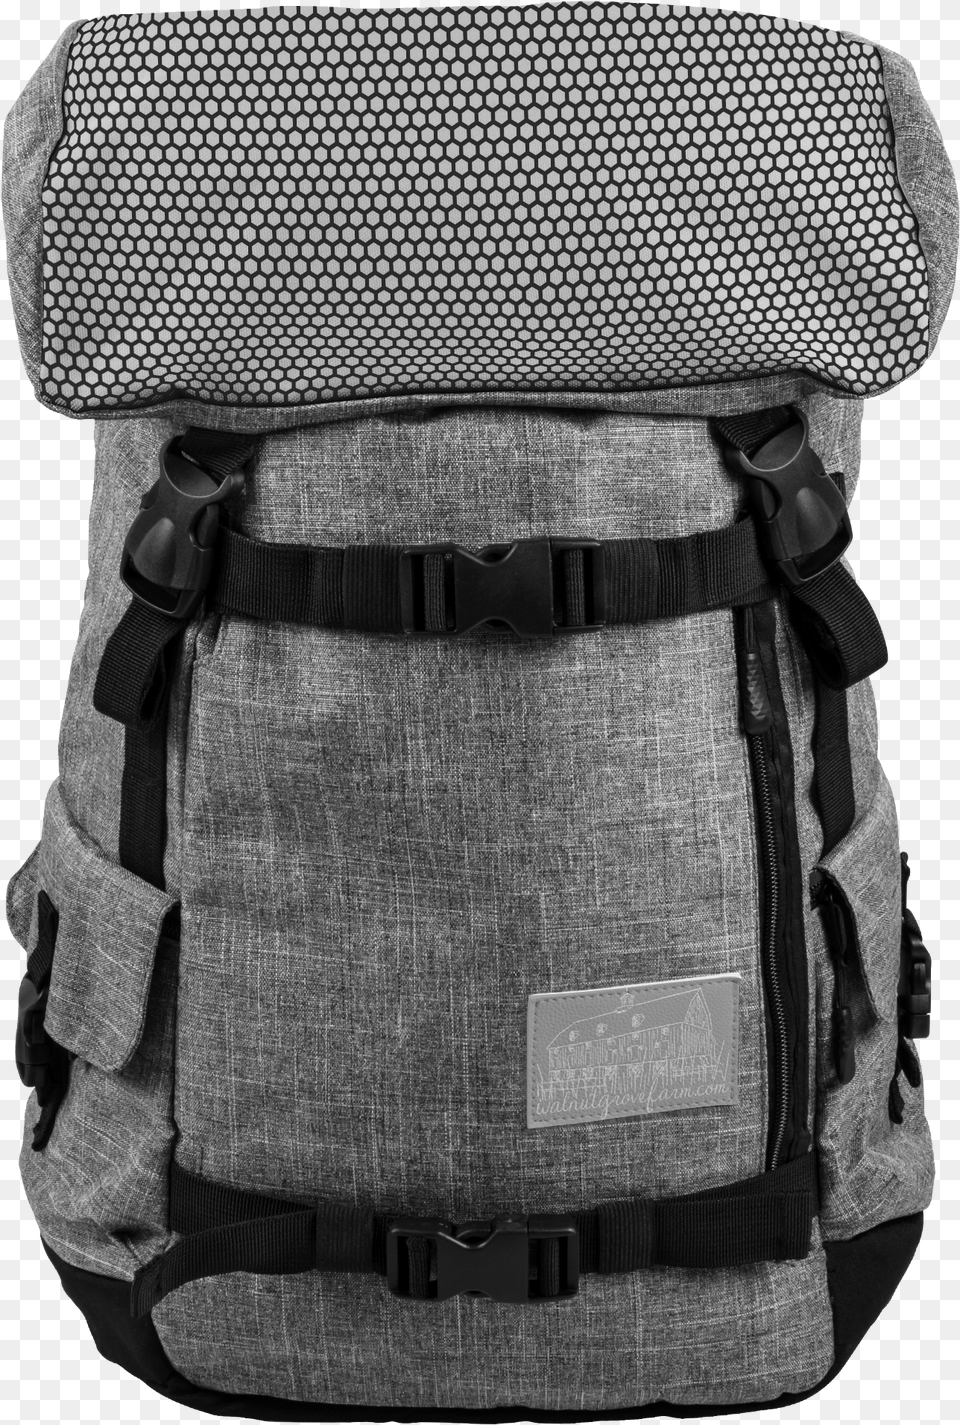 Walnut Grove Farm Honeycomb Backpack, Bag, Accessories, Handbag Png Image